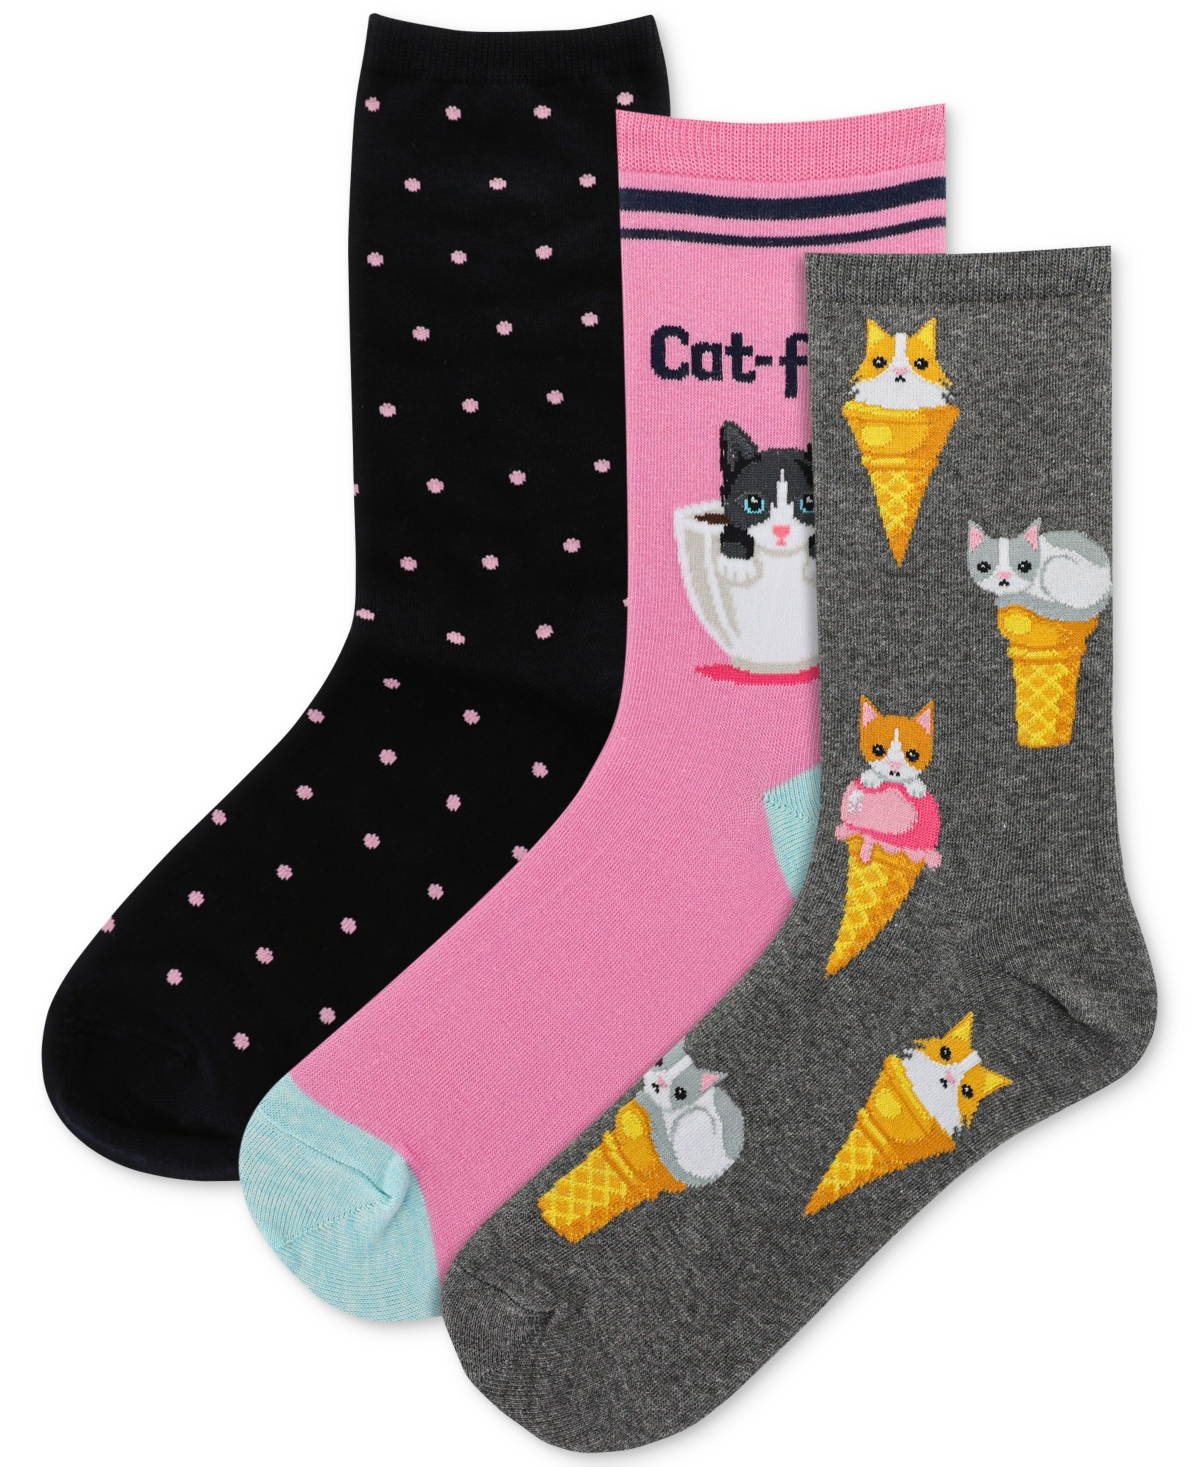 Hot Sox Women's 3-Pk. Assorted Cats Crew Socks